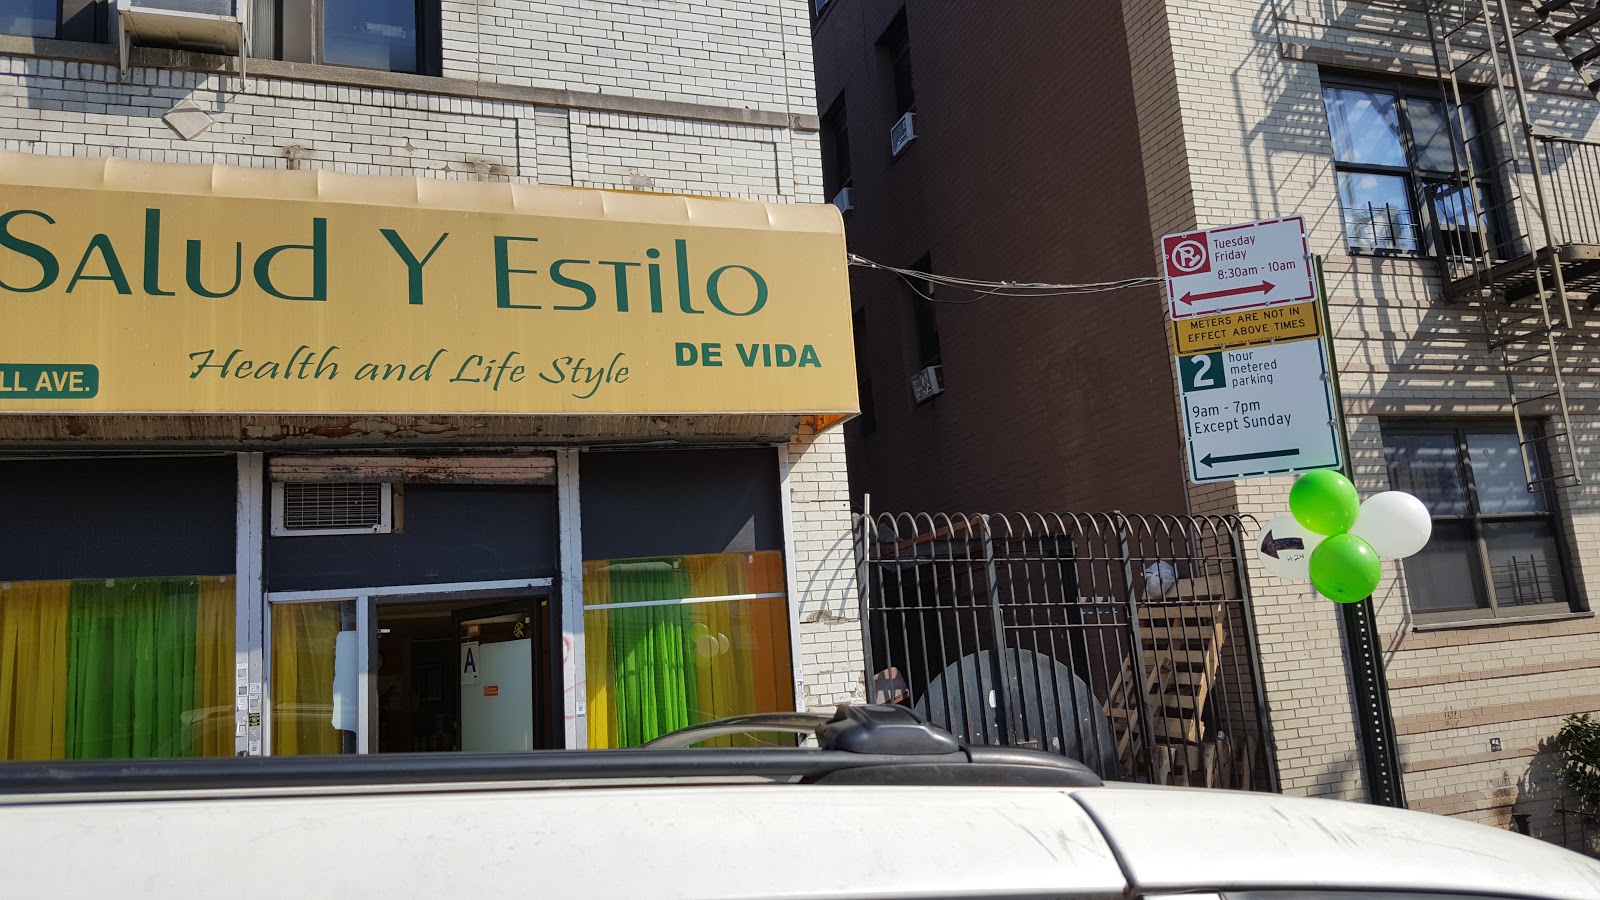 Photo of Salud Y Estilo De Vida Herbalife in New York City, New York, United States - 1 Picture of Restaurant, Food, Point of interest, Establishment